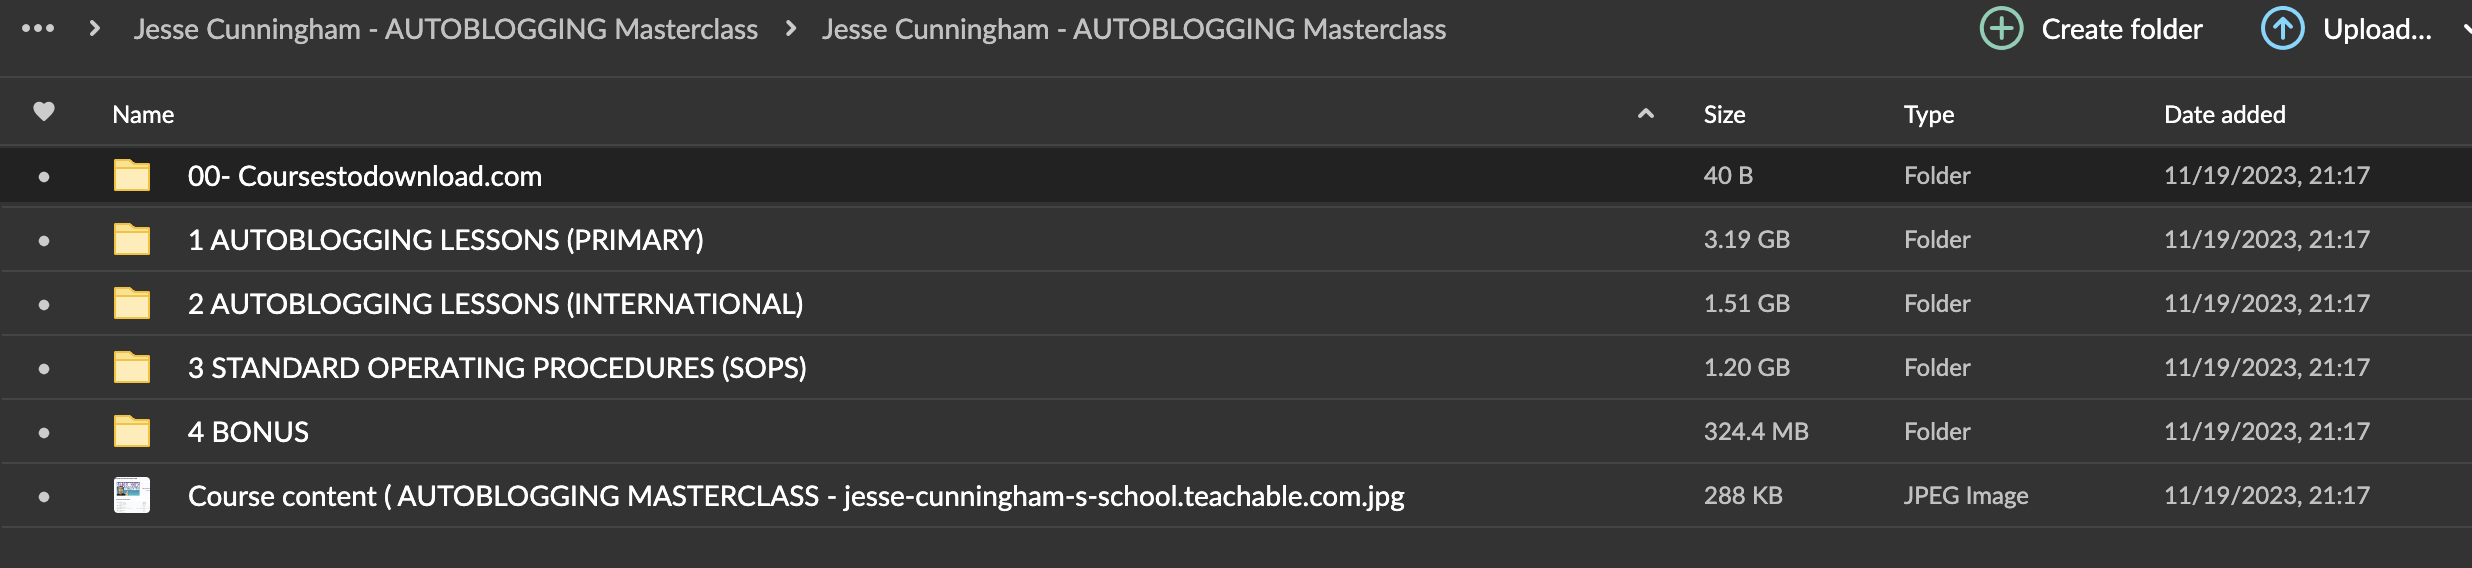 Jesse Cunningham – AUTOBLOGGING Masterclass Download